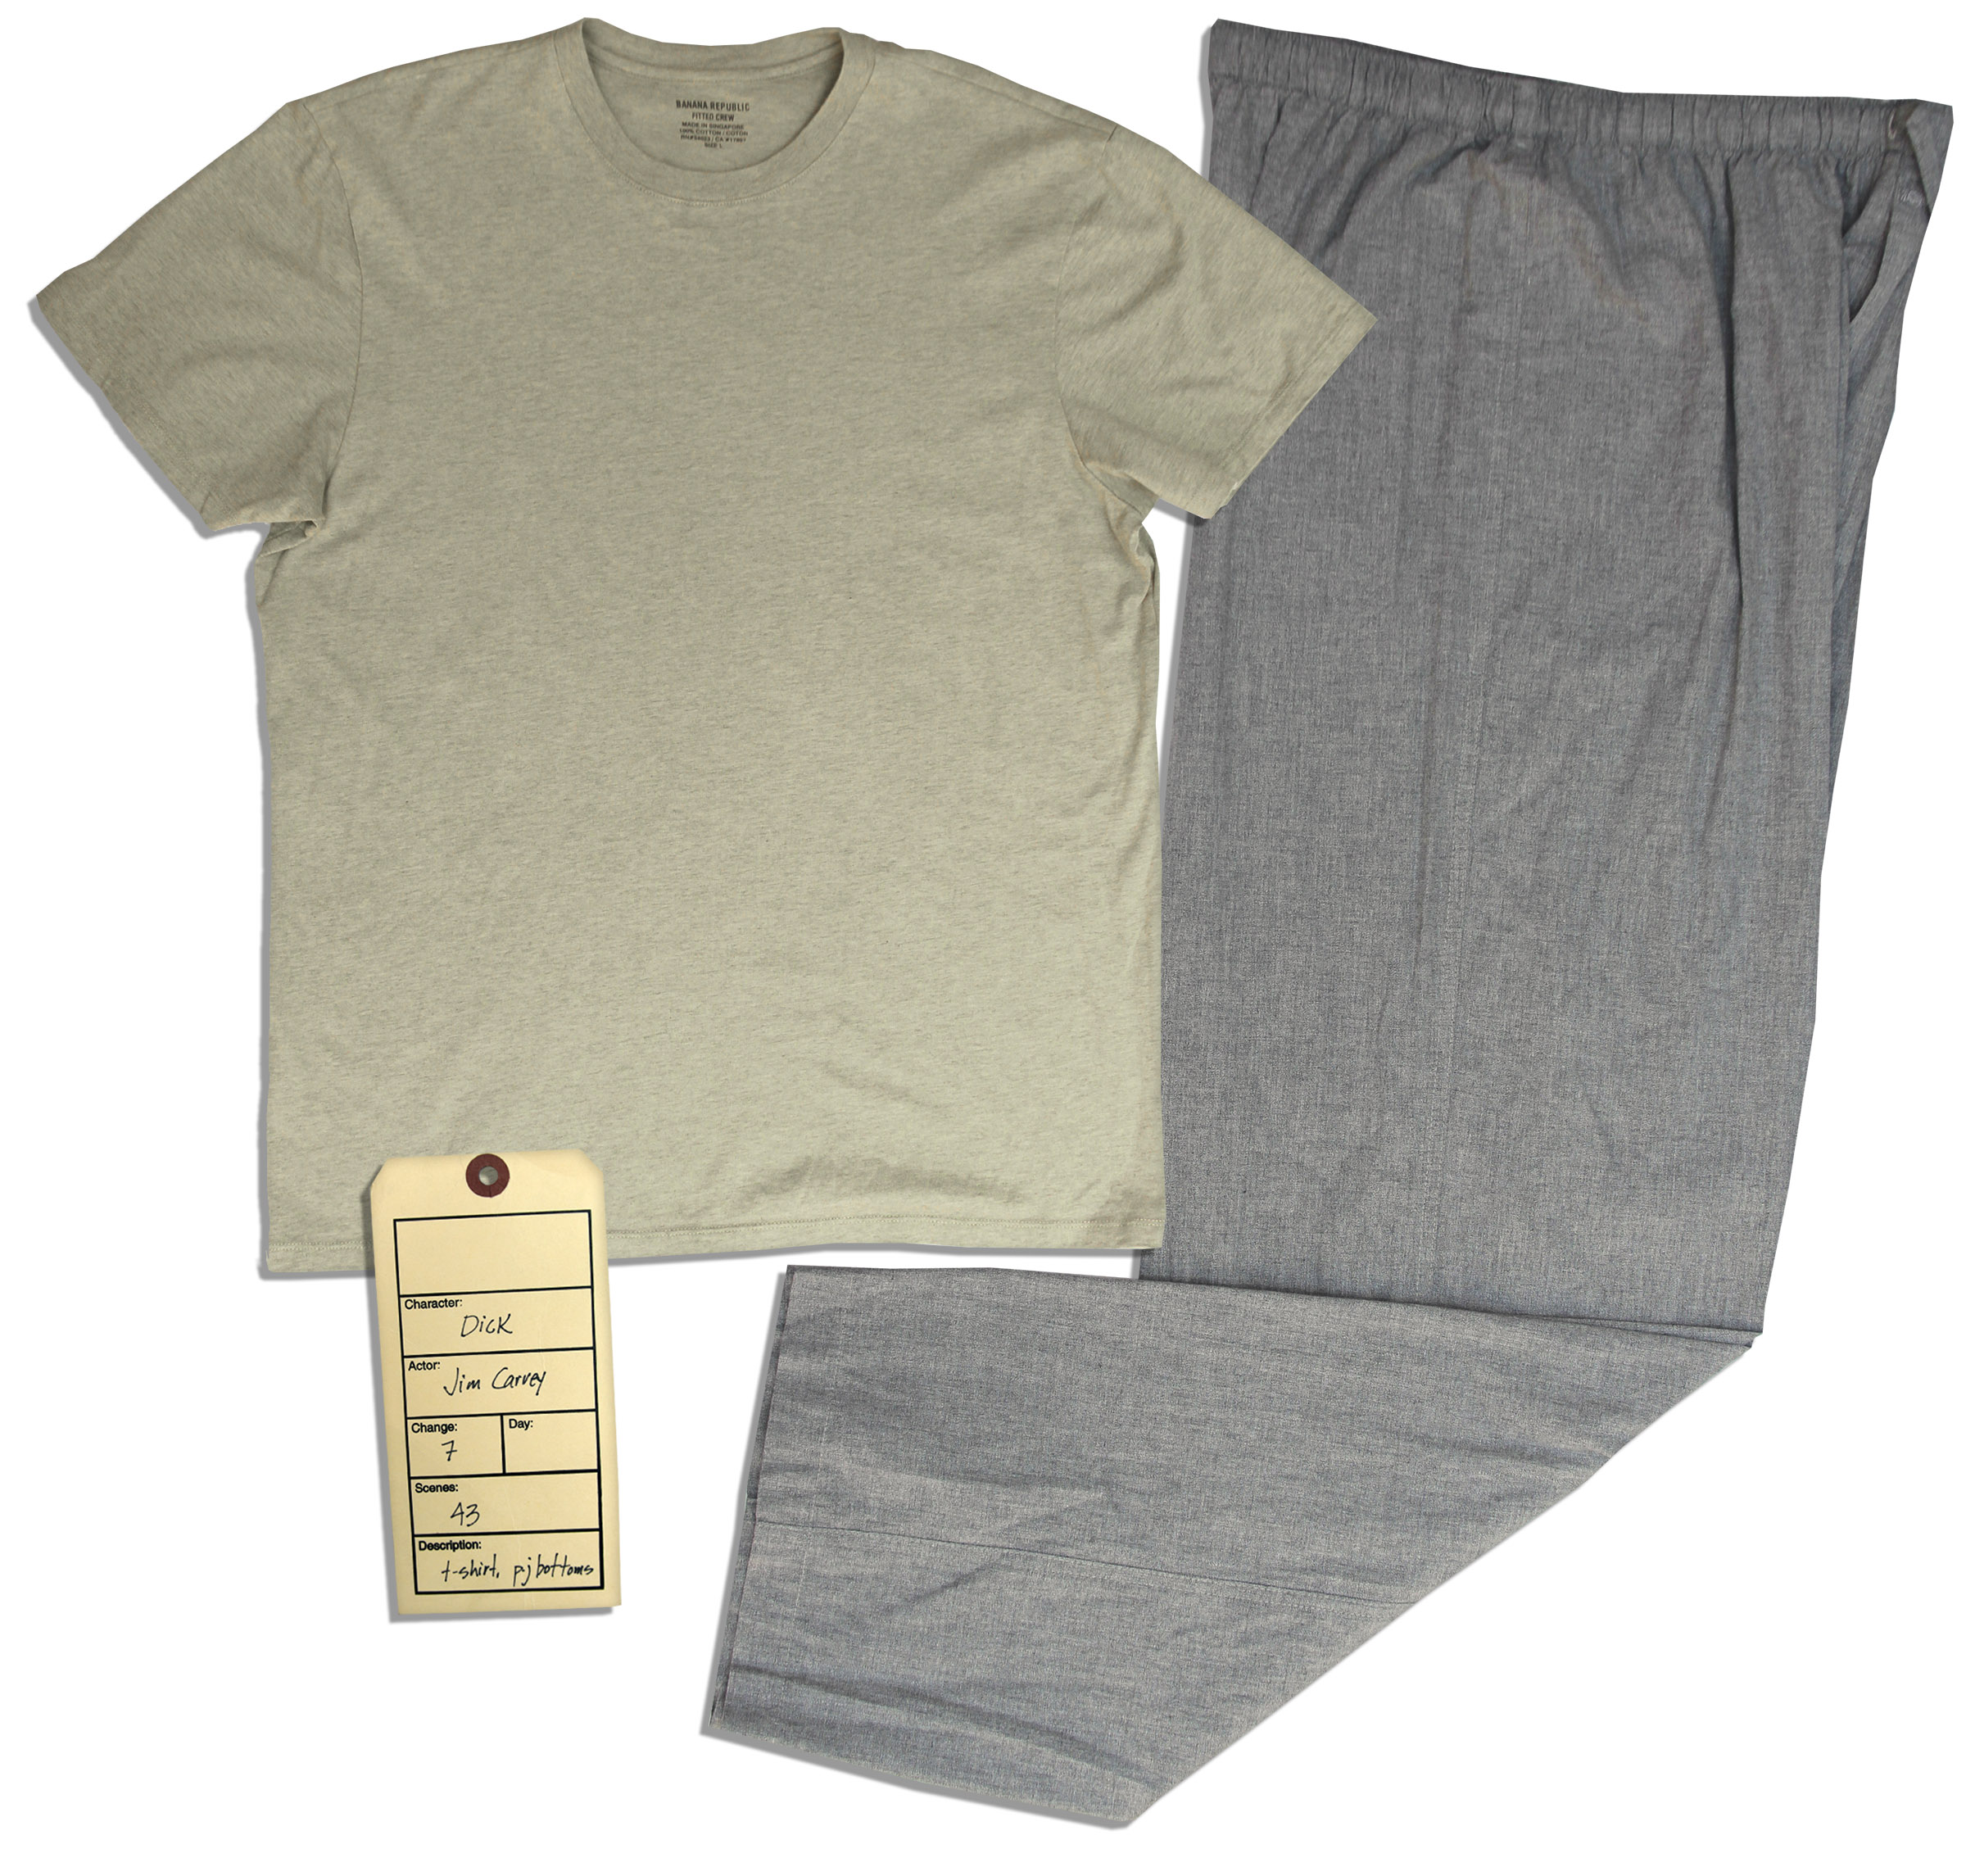 Jim Carrey wardrobe from ''Fun With Dick & Jane''. Two-piece ensemble comprises a khaki t-shirt by